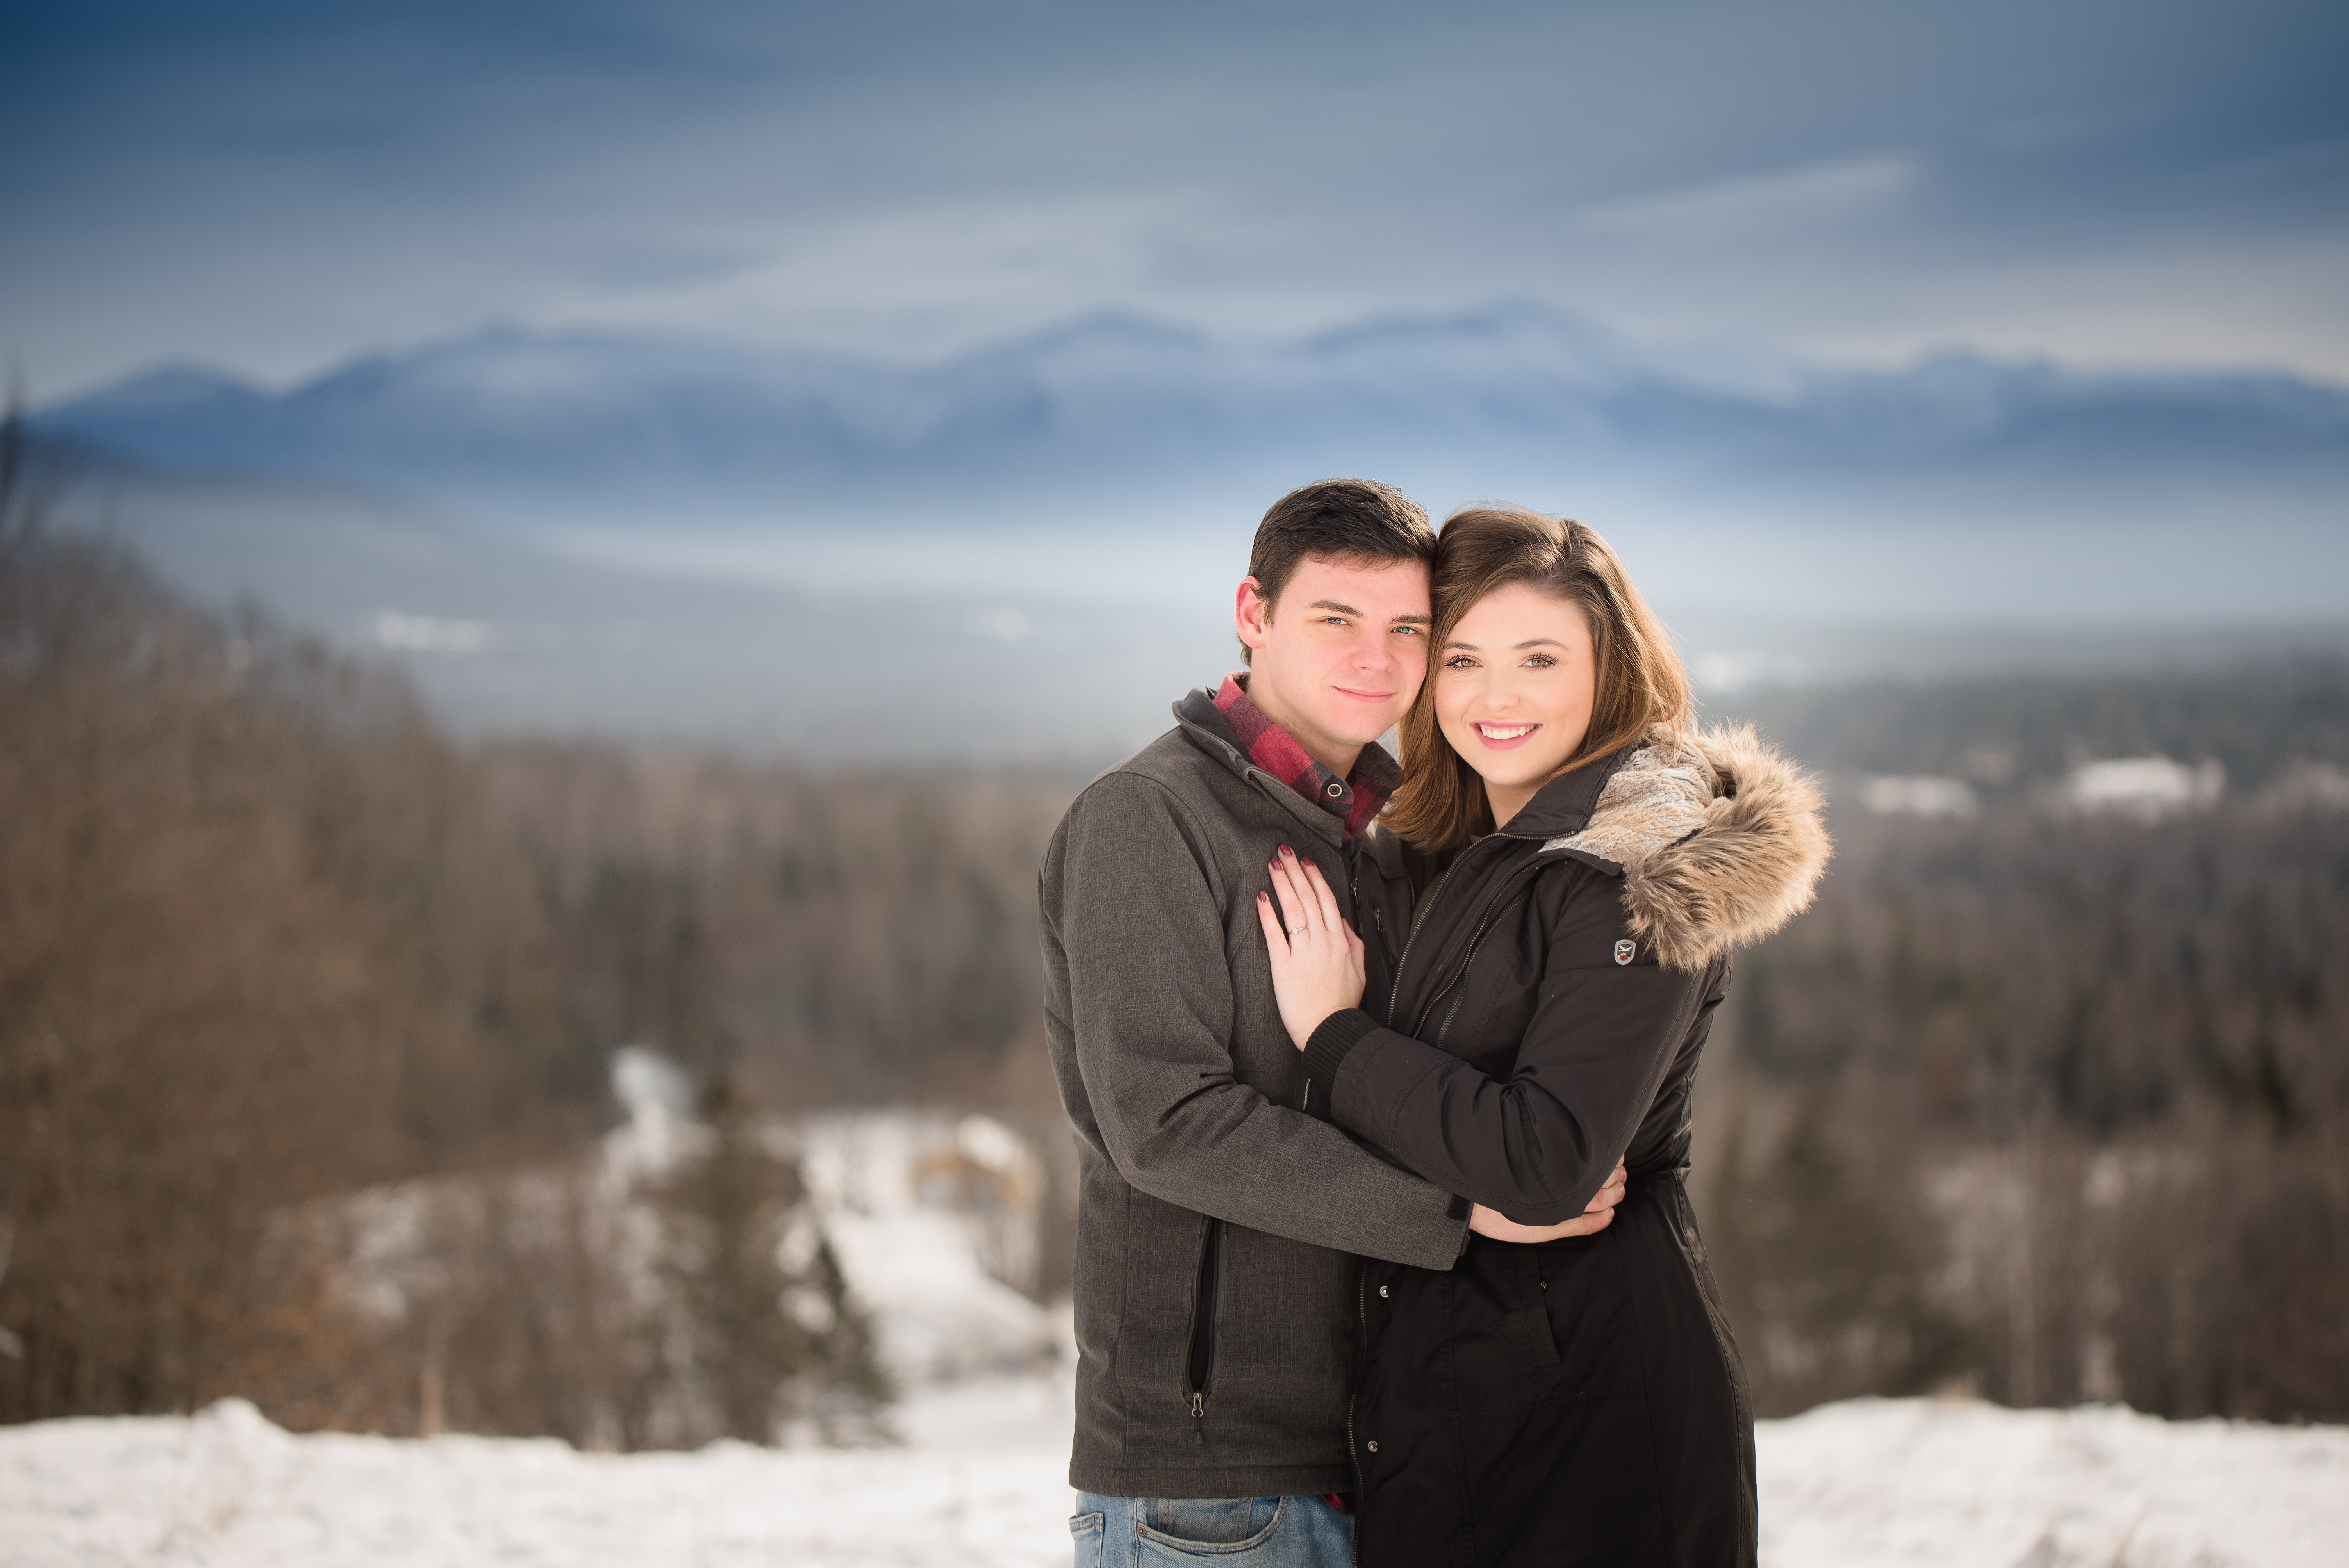 Engagement Photographer 2 - Engagement + Couples Photography